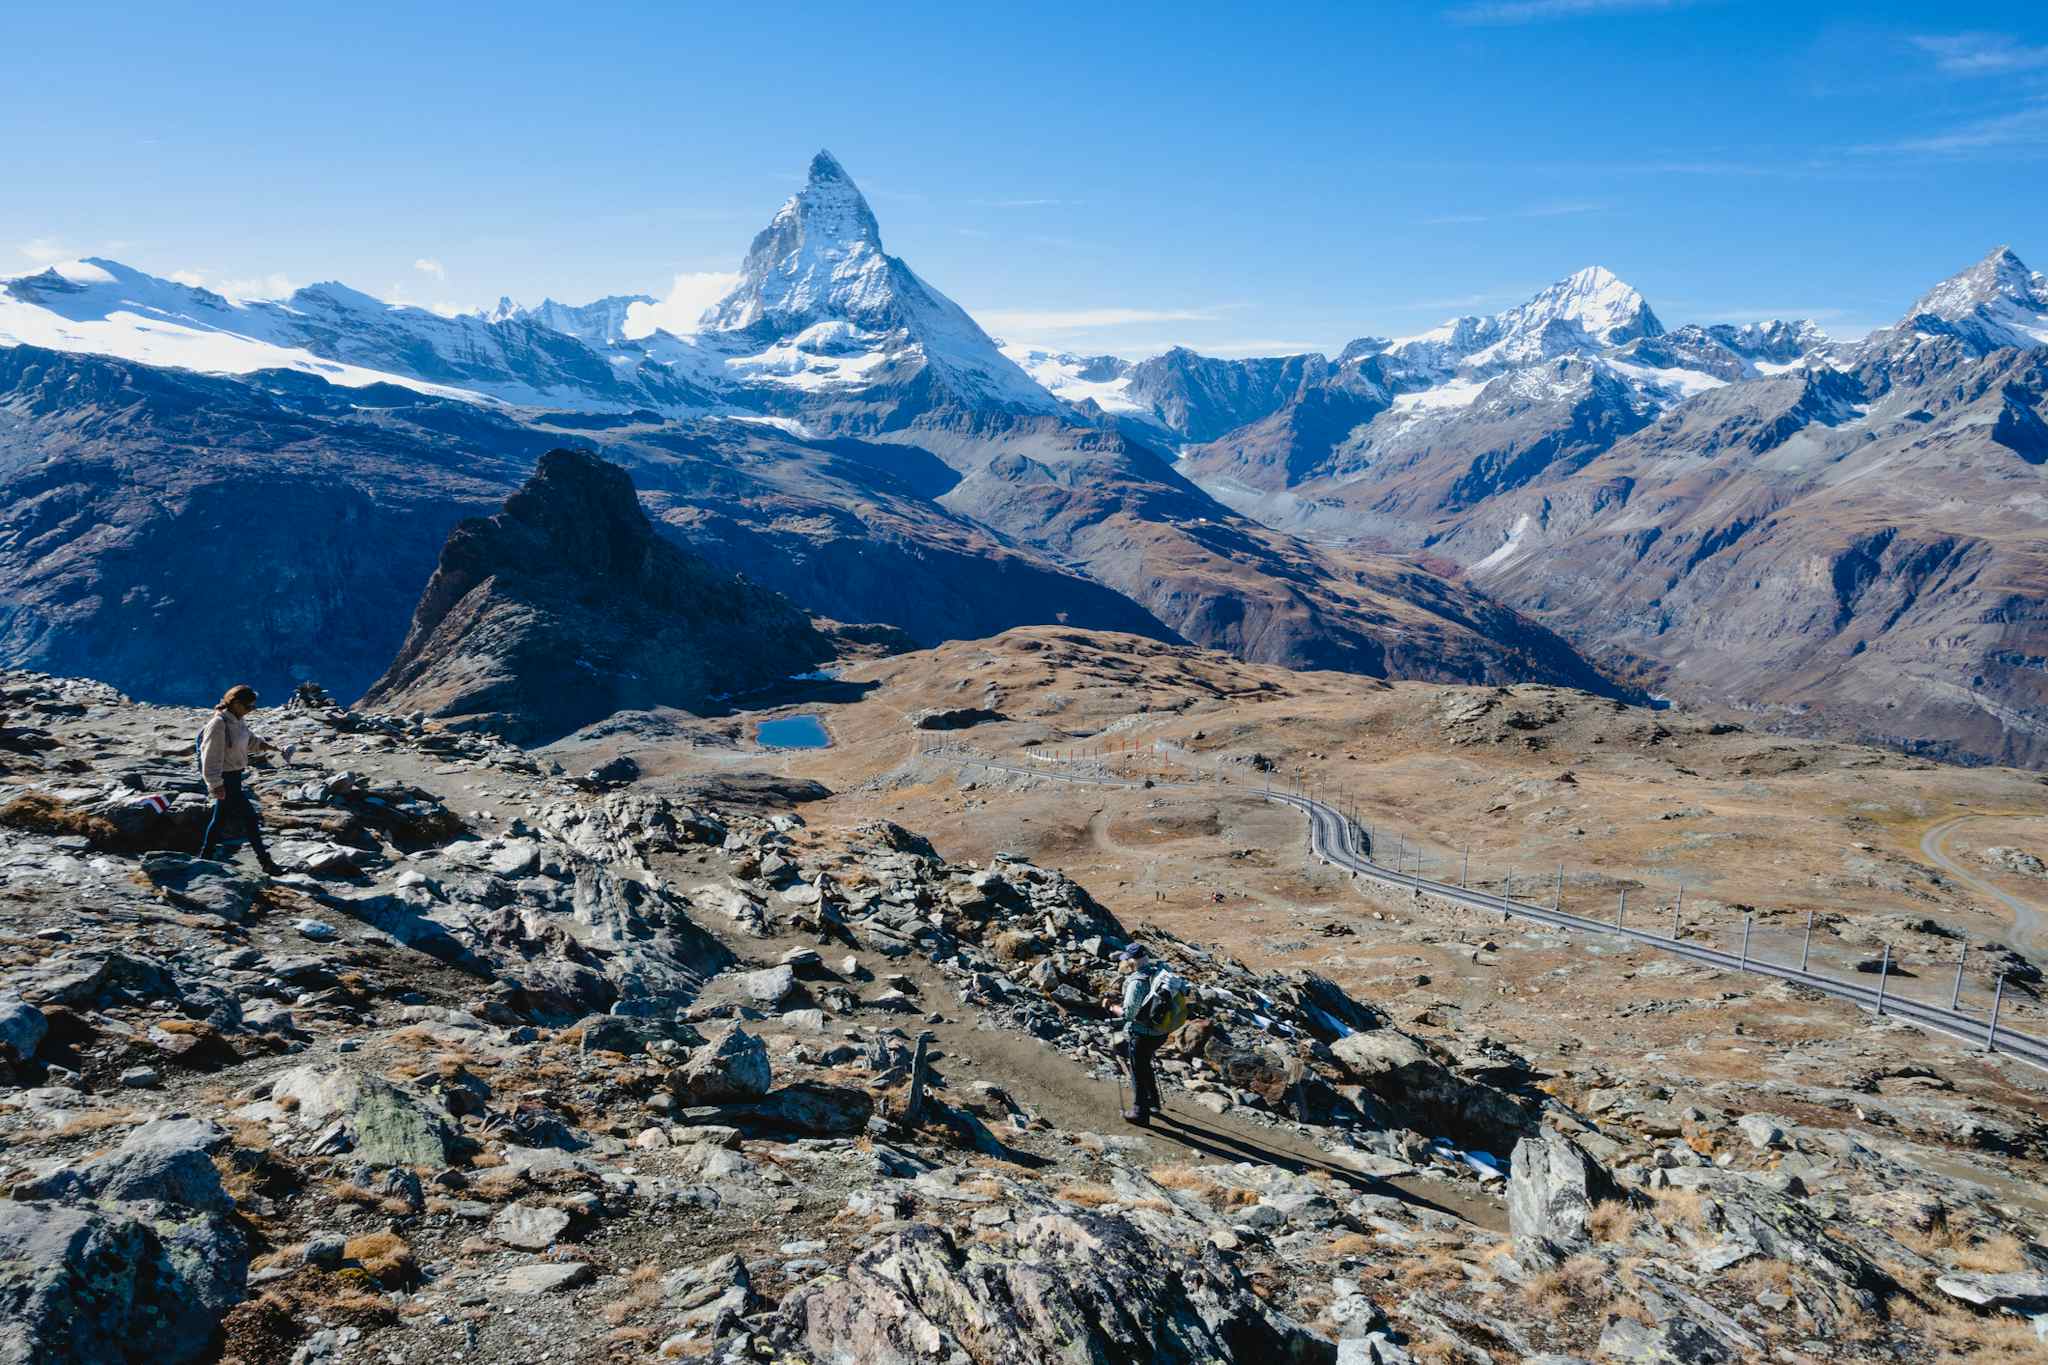 Matterhorn hiking trail
Getty: 1495885456